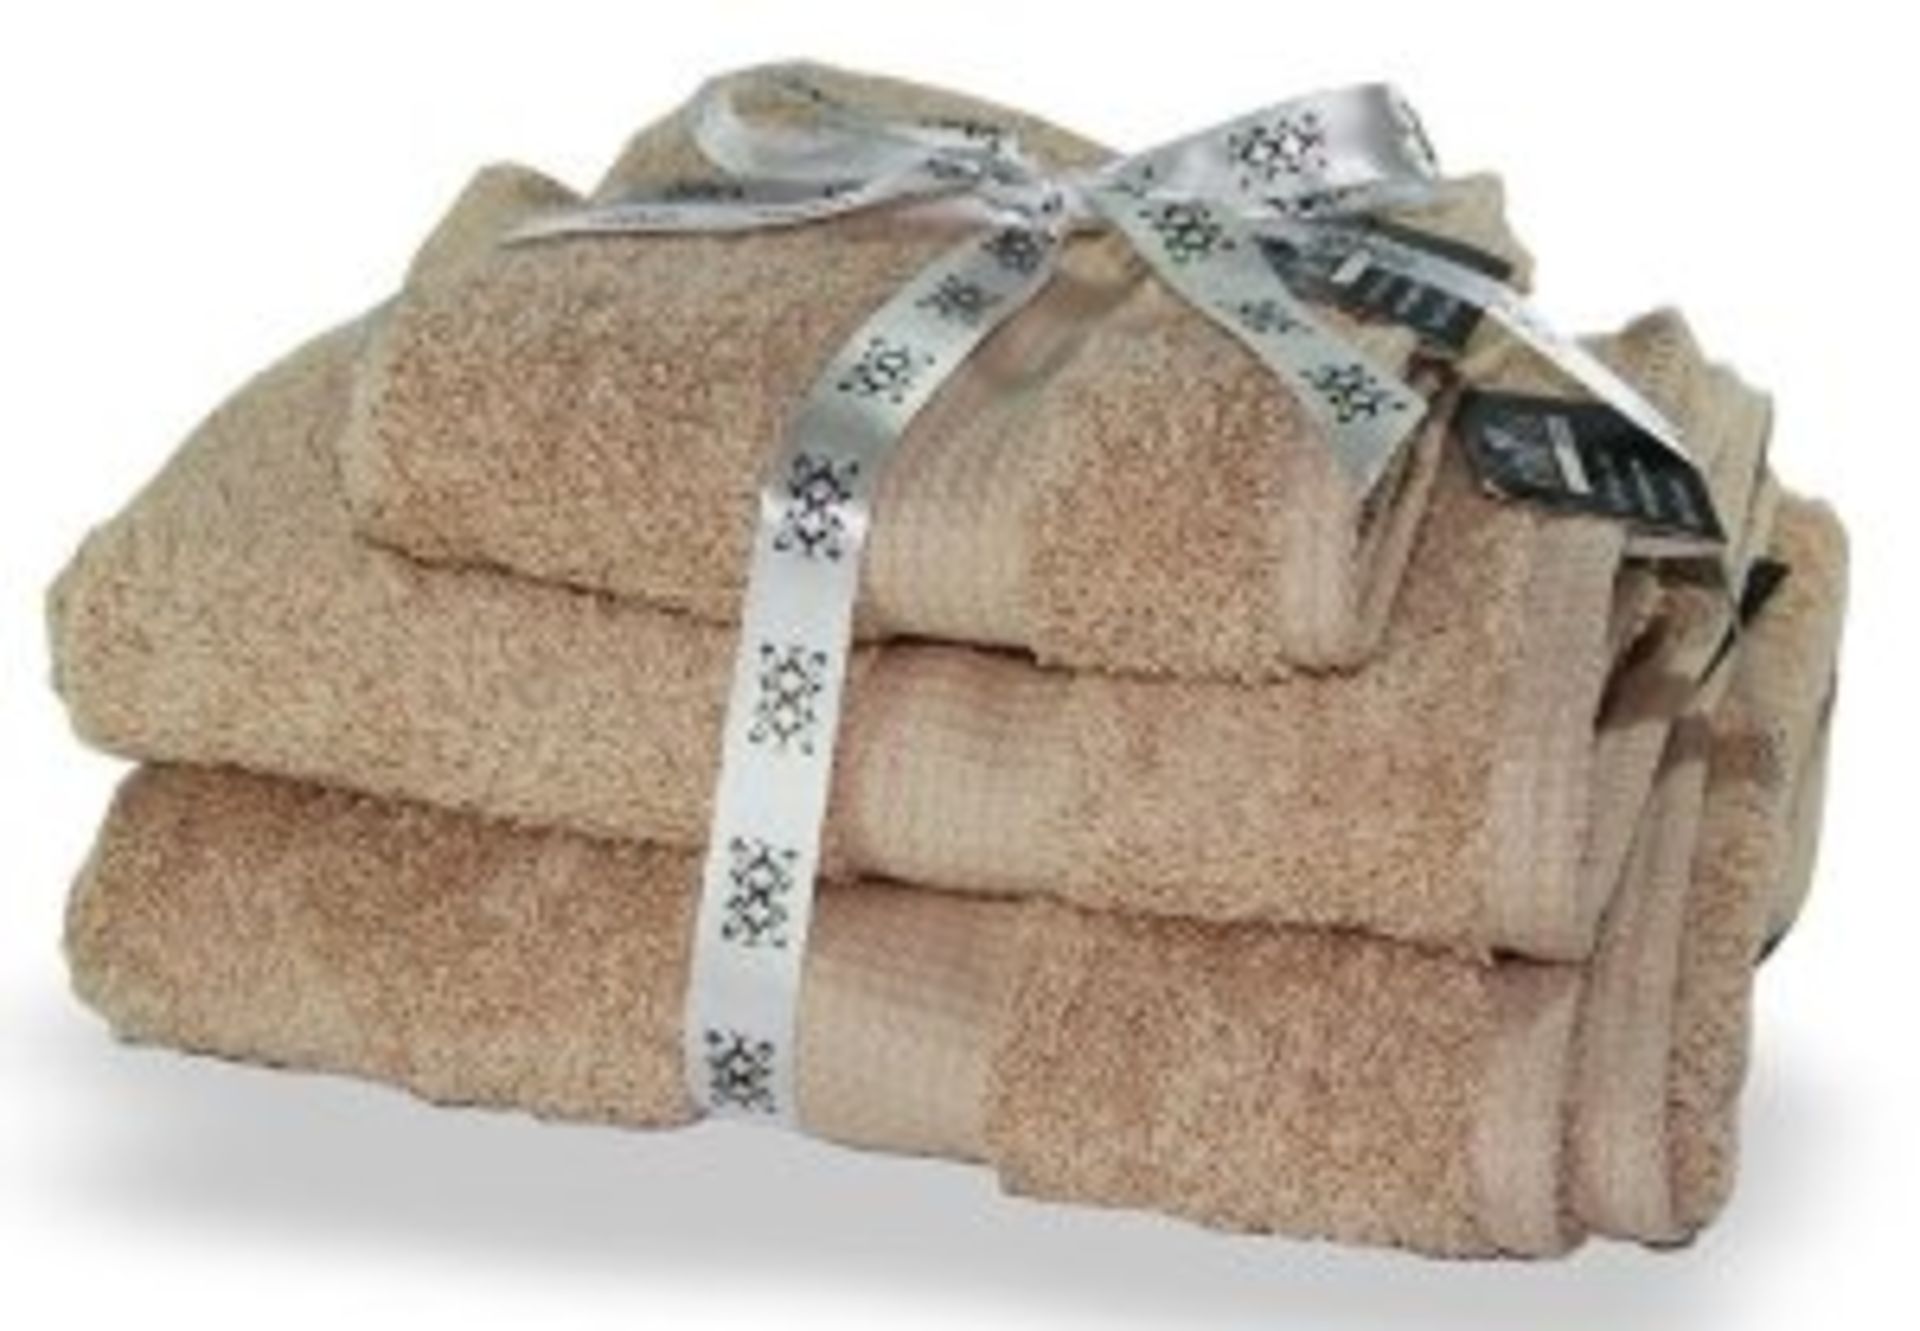 V *TRADE QTY* Brand New Six Piece Latte Towel Bale Set Includes 2 Bath Towels 2 Hand Towels 2 Face